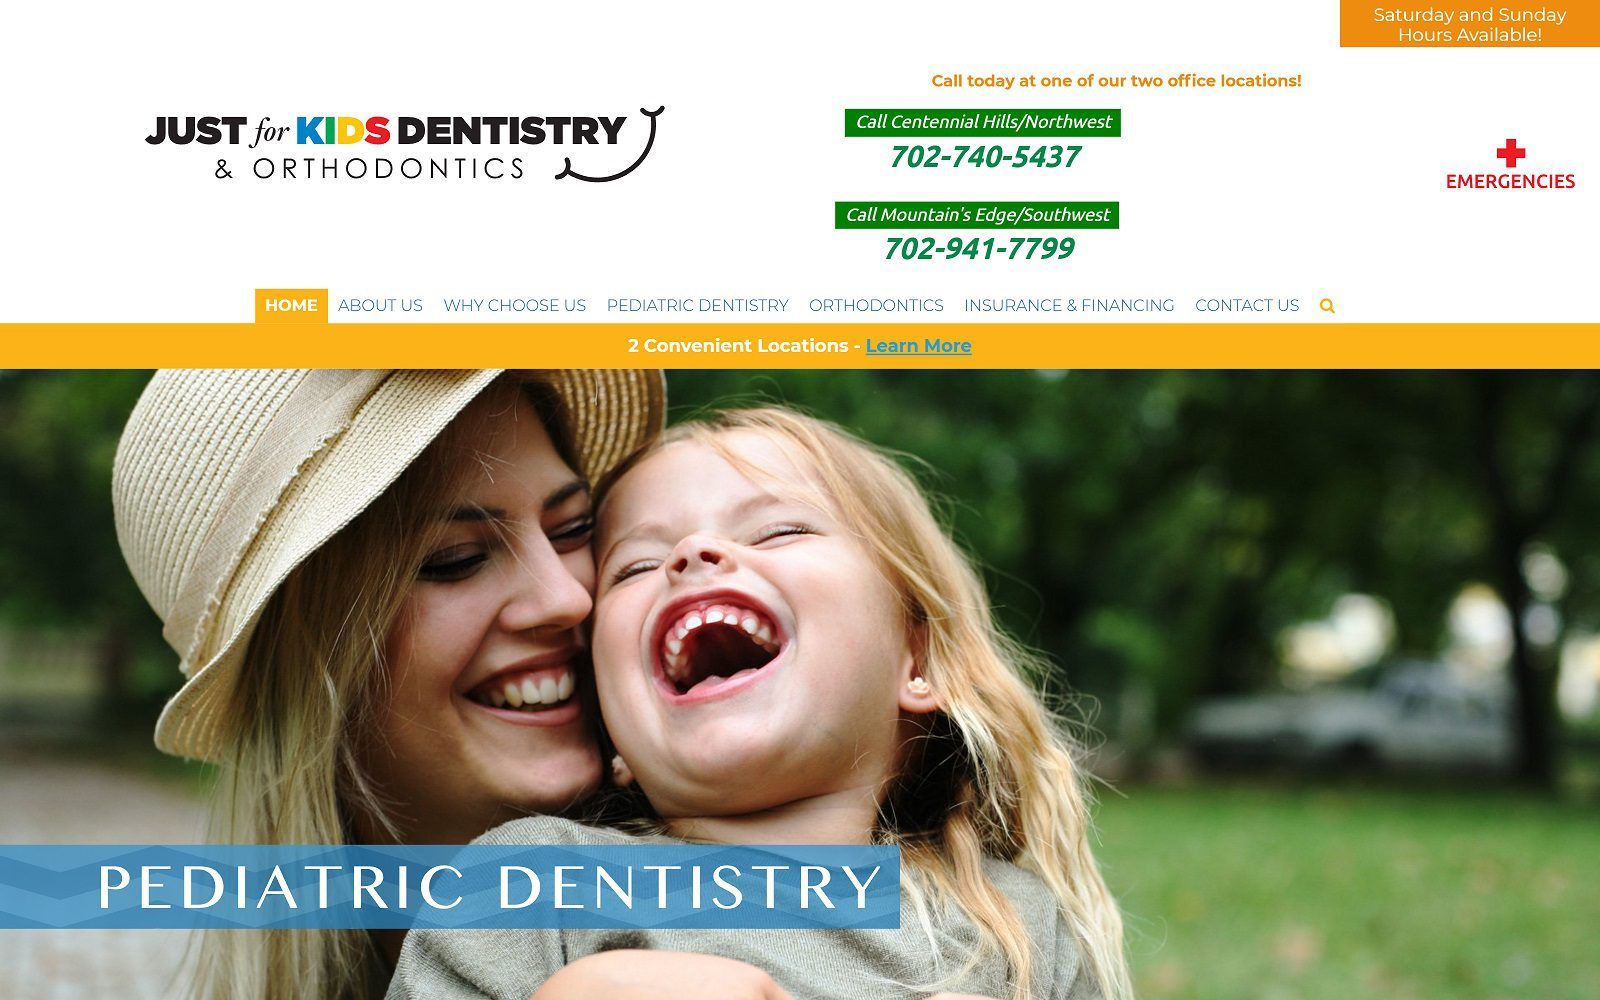 The screenshot of just for kids dentistry & orthodontics website